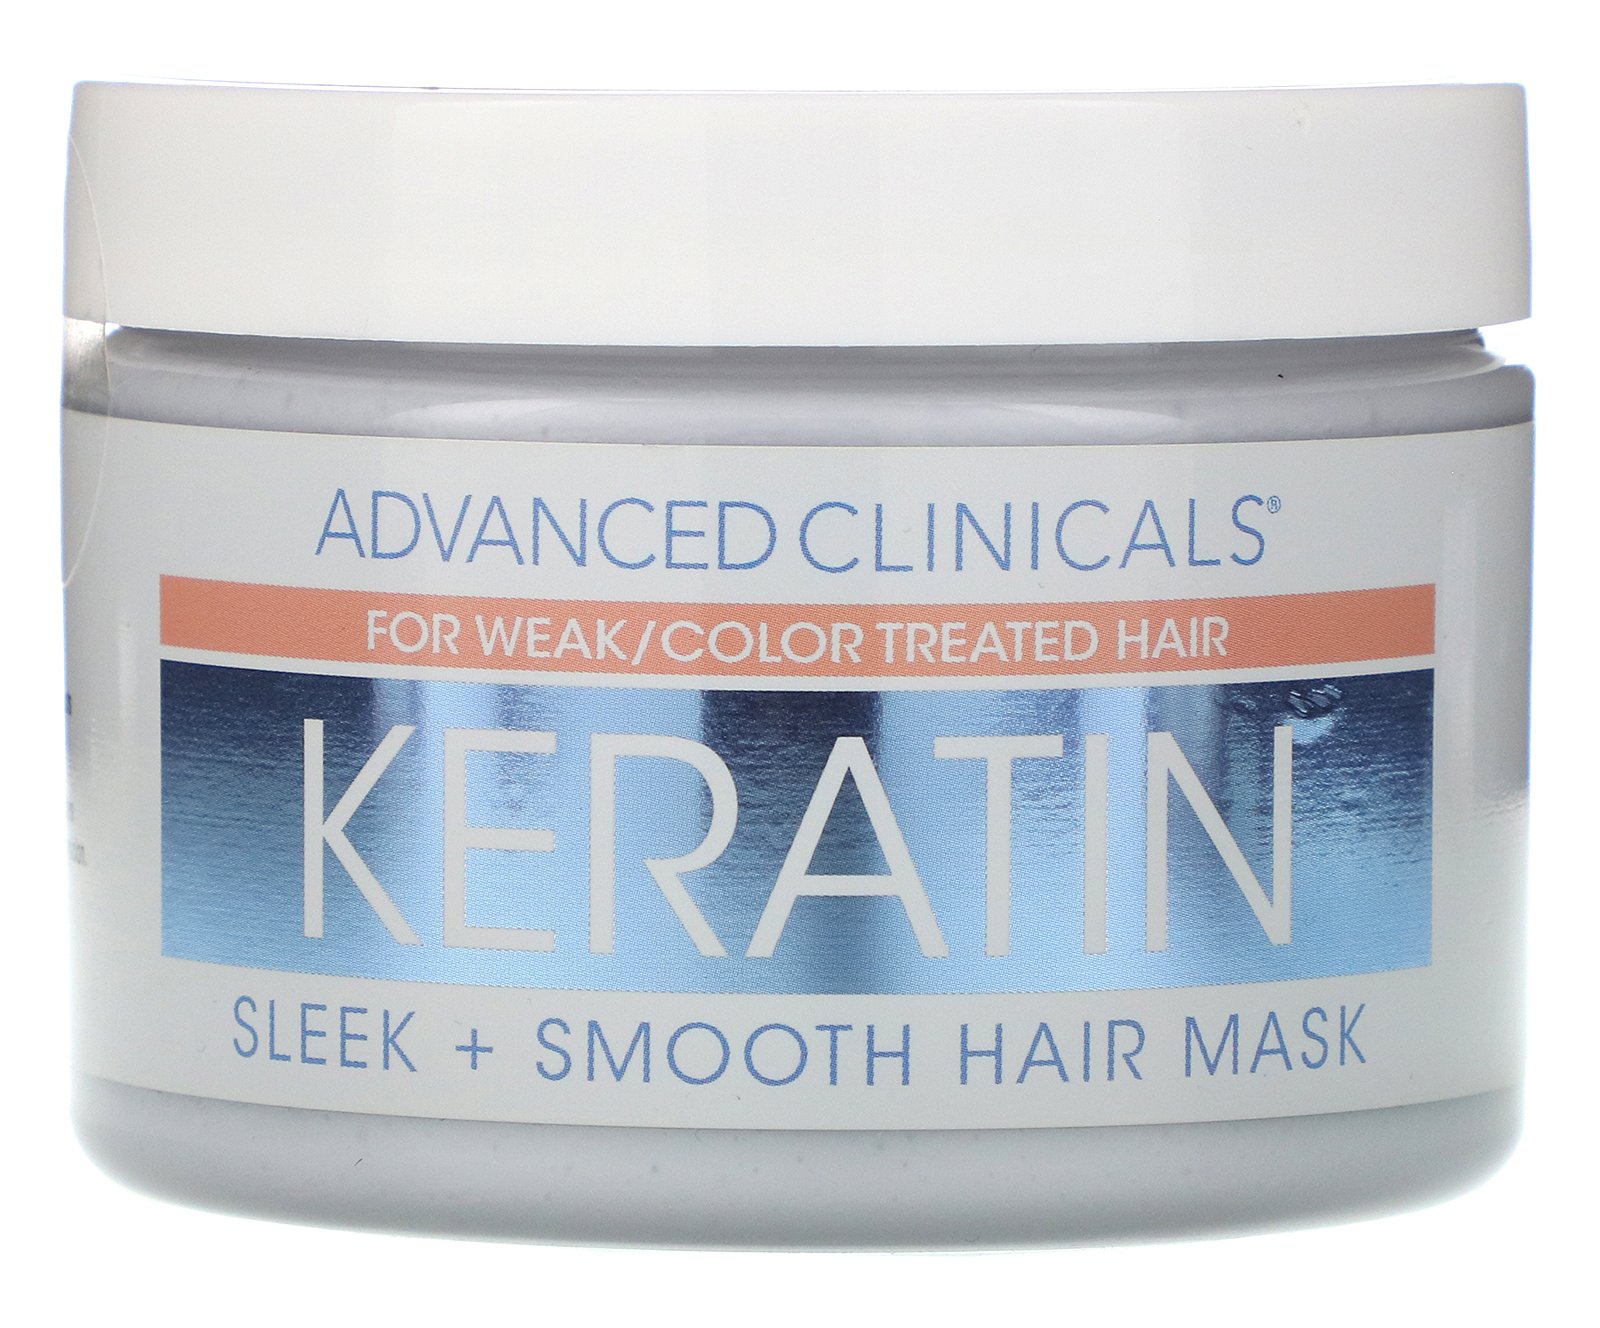 Advanced Clinicals Keratin, Sleek + Smooth Hair Mask